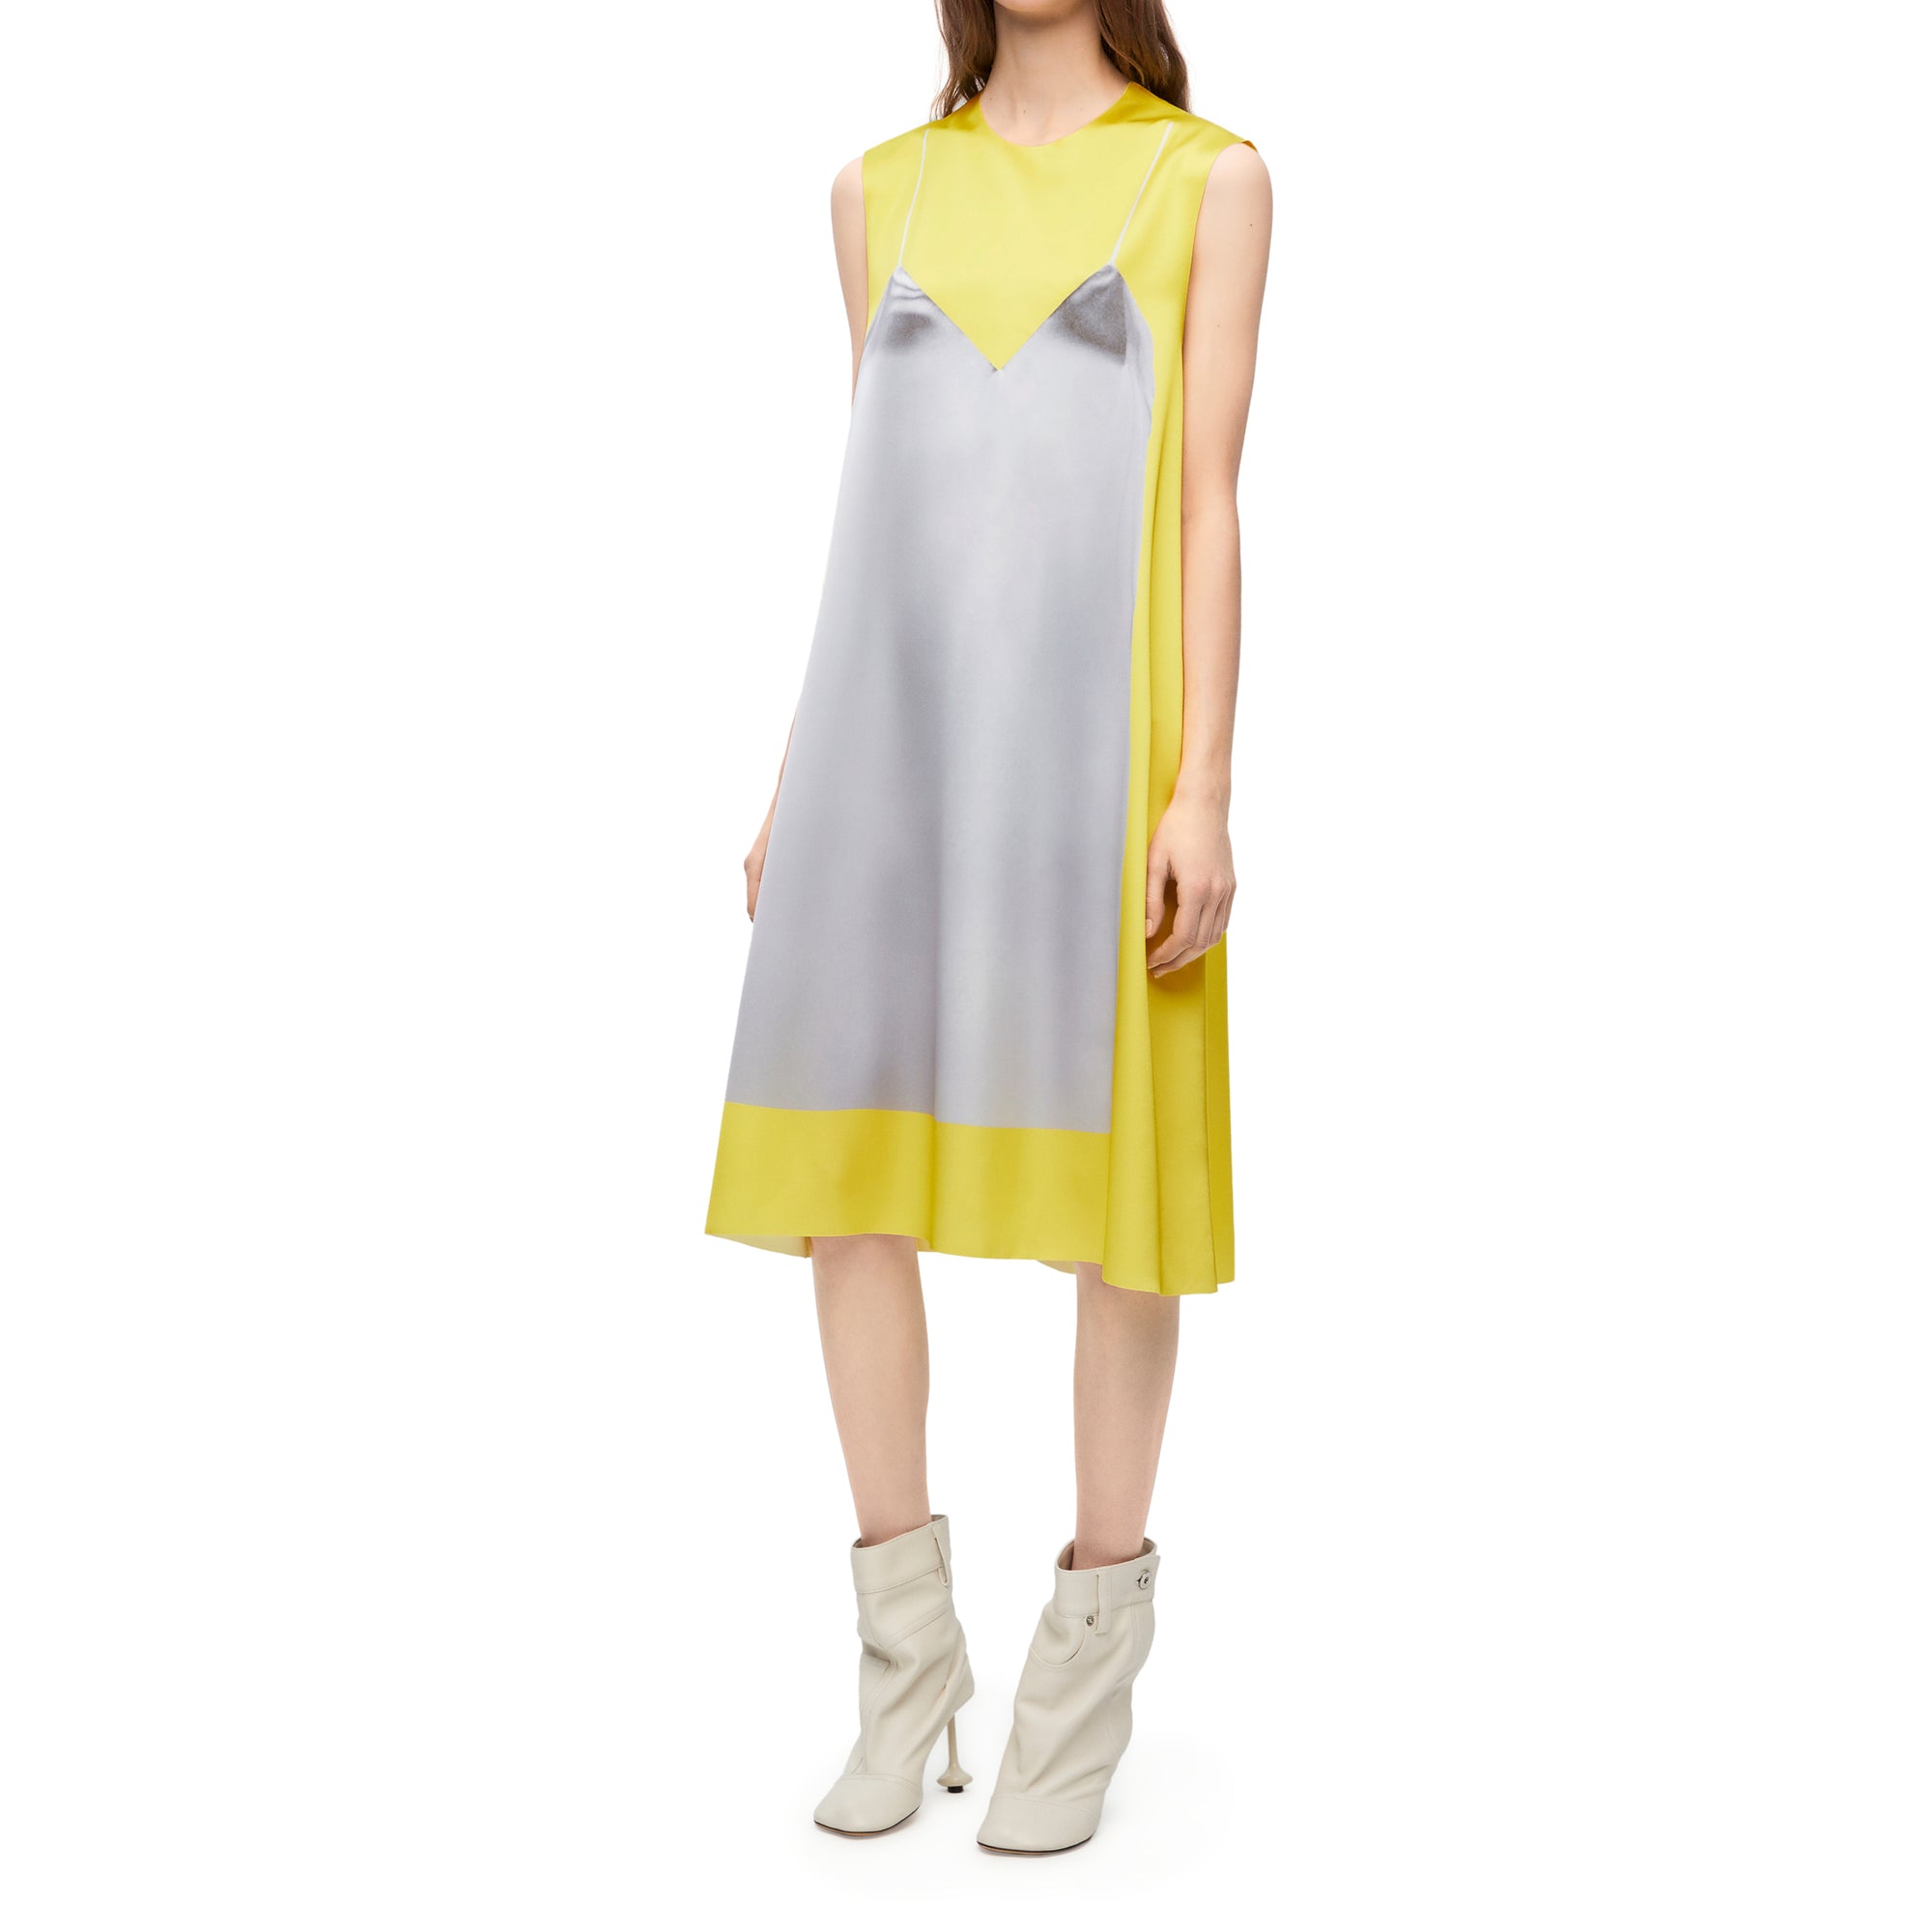 Loewe - Women’s A-Line Dress - (Yellow/Grey) view 3